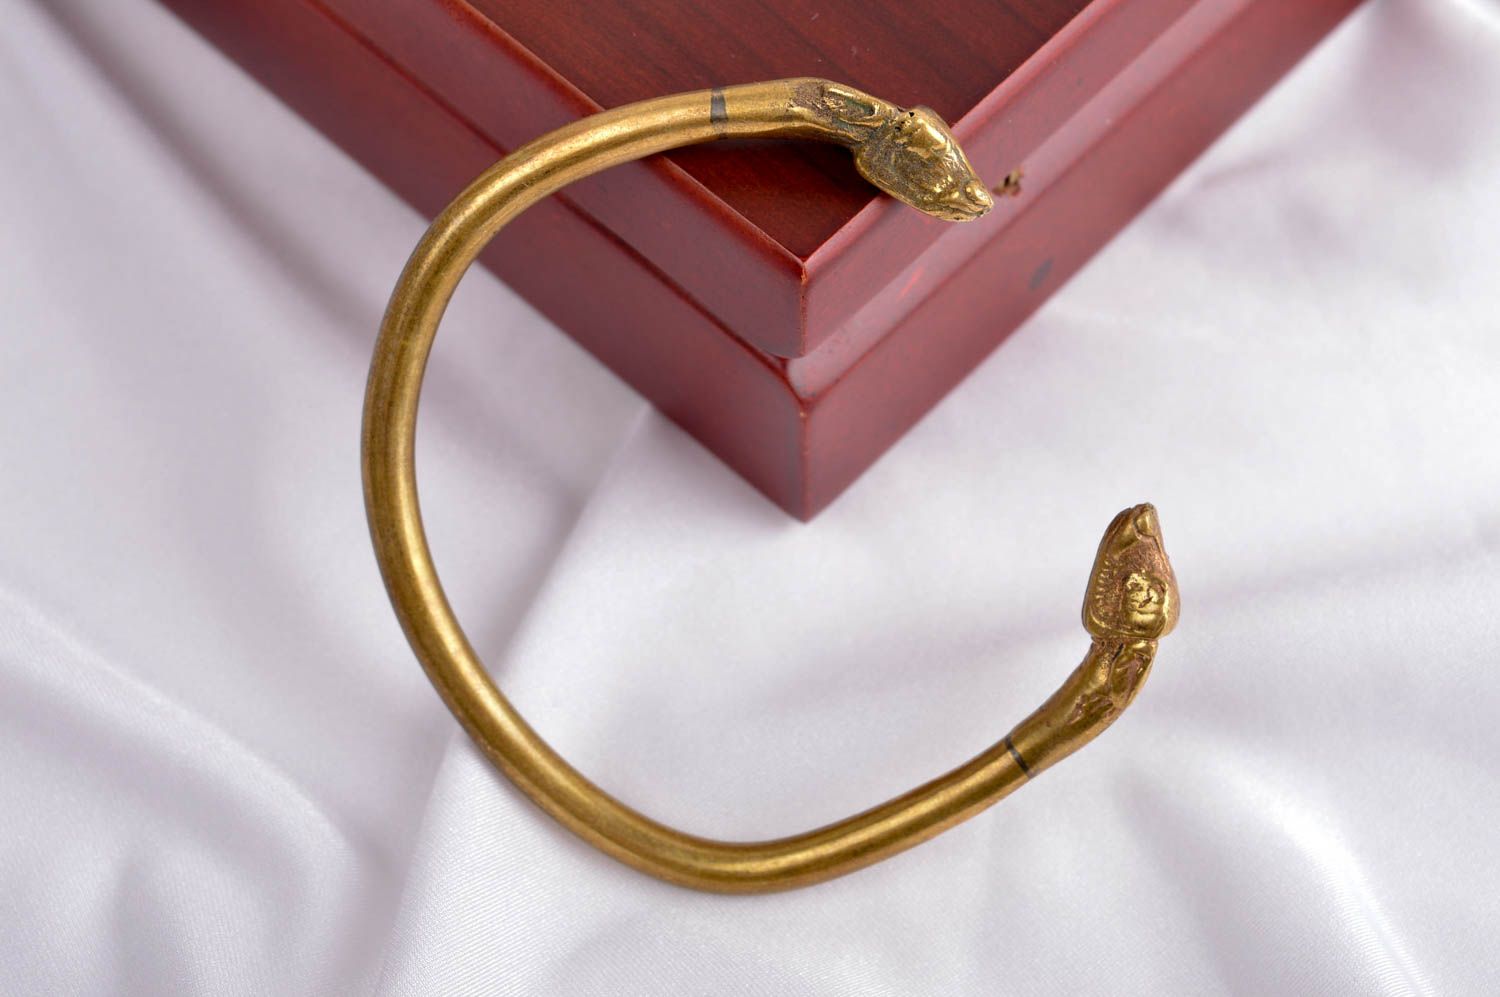 Stylish handmade metal bracelet womens bracelet designs cool jewelry gift ideas photo 1